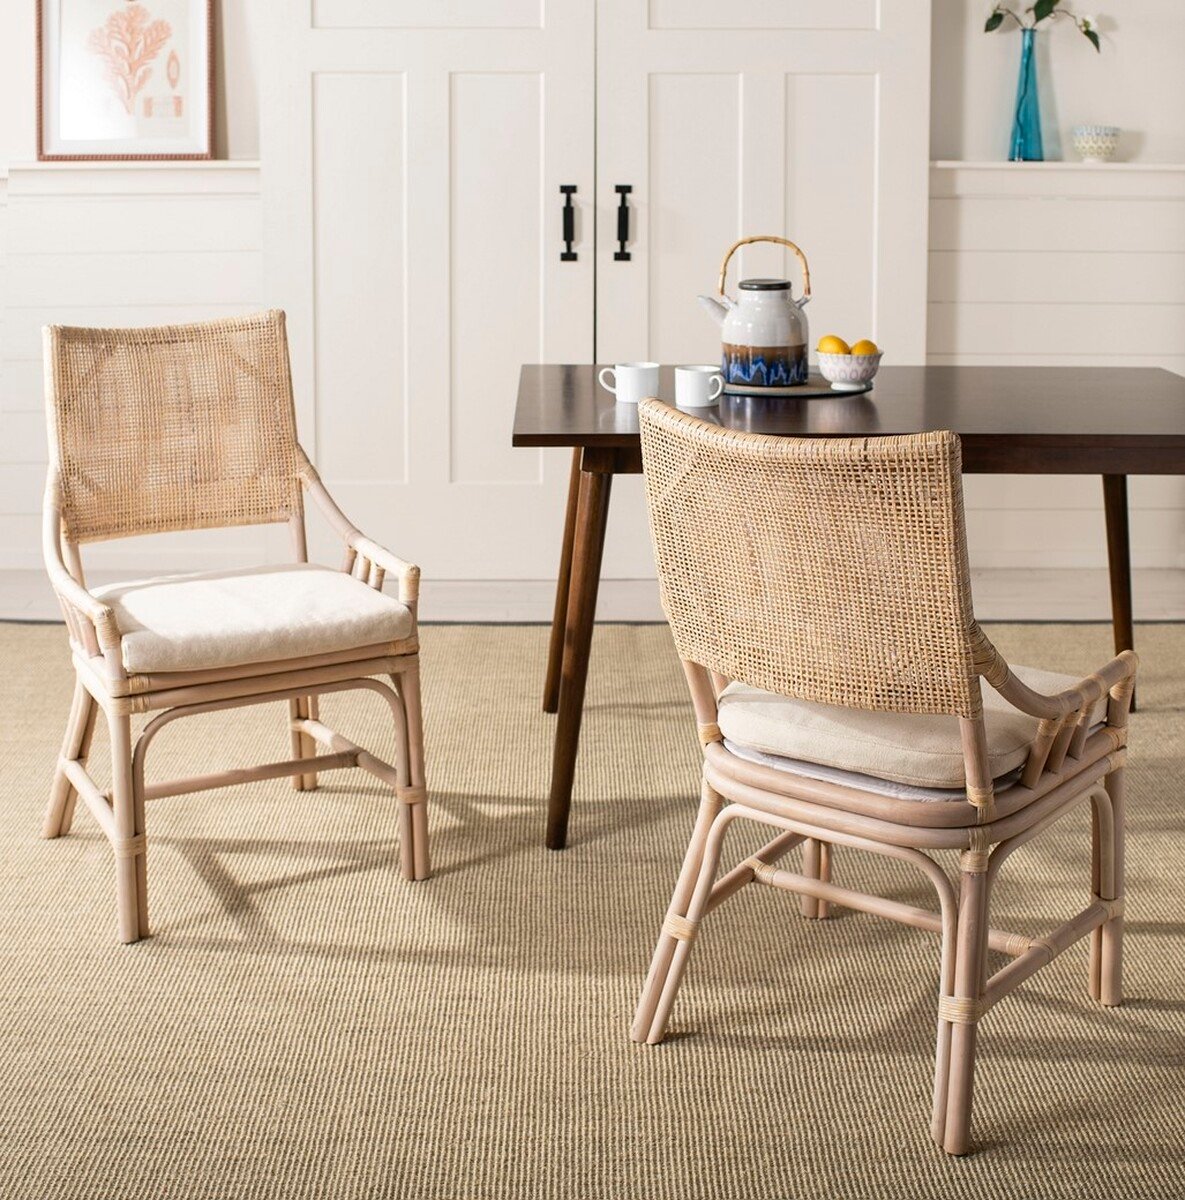 Donatella Rattan Chair - Natural White Wash - Safavieh - Image 3